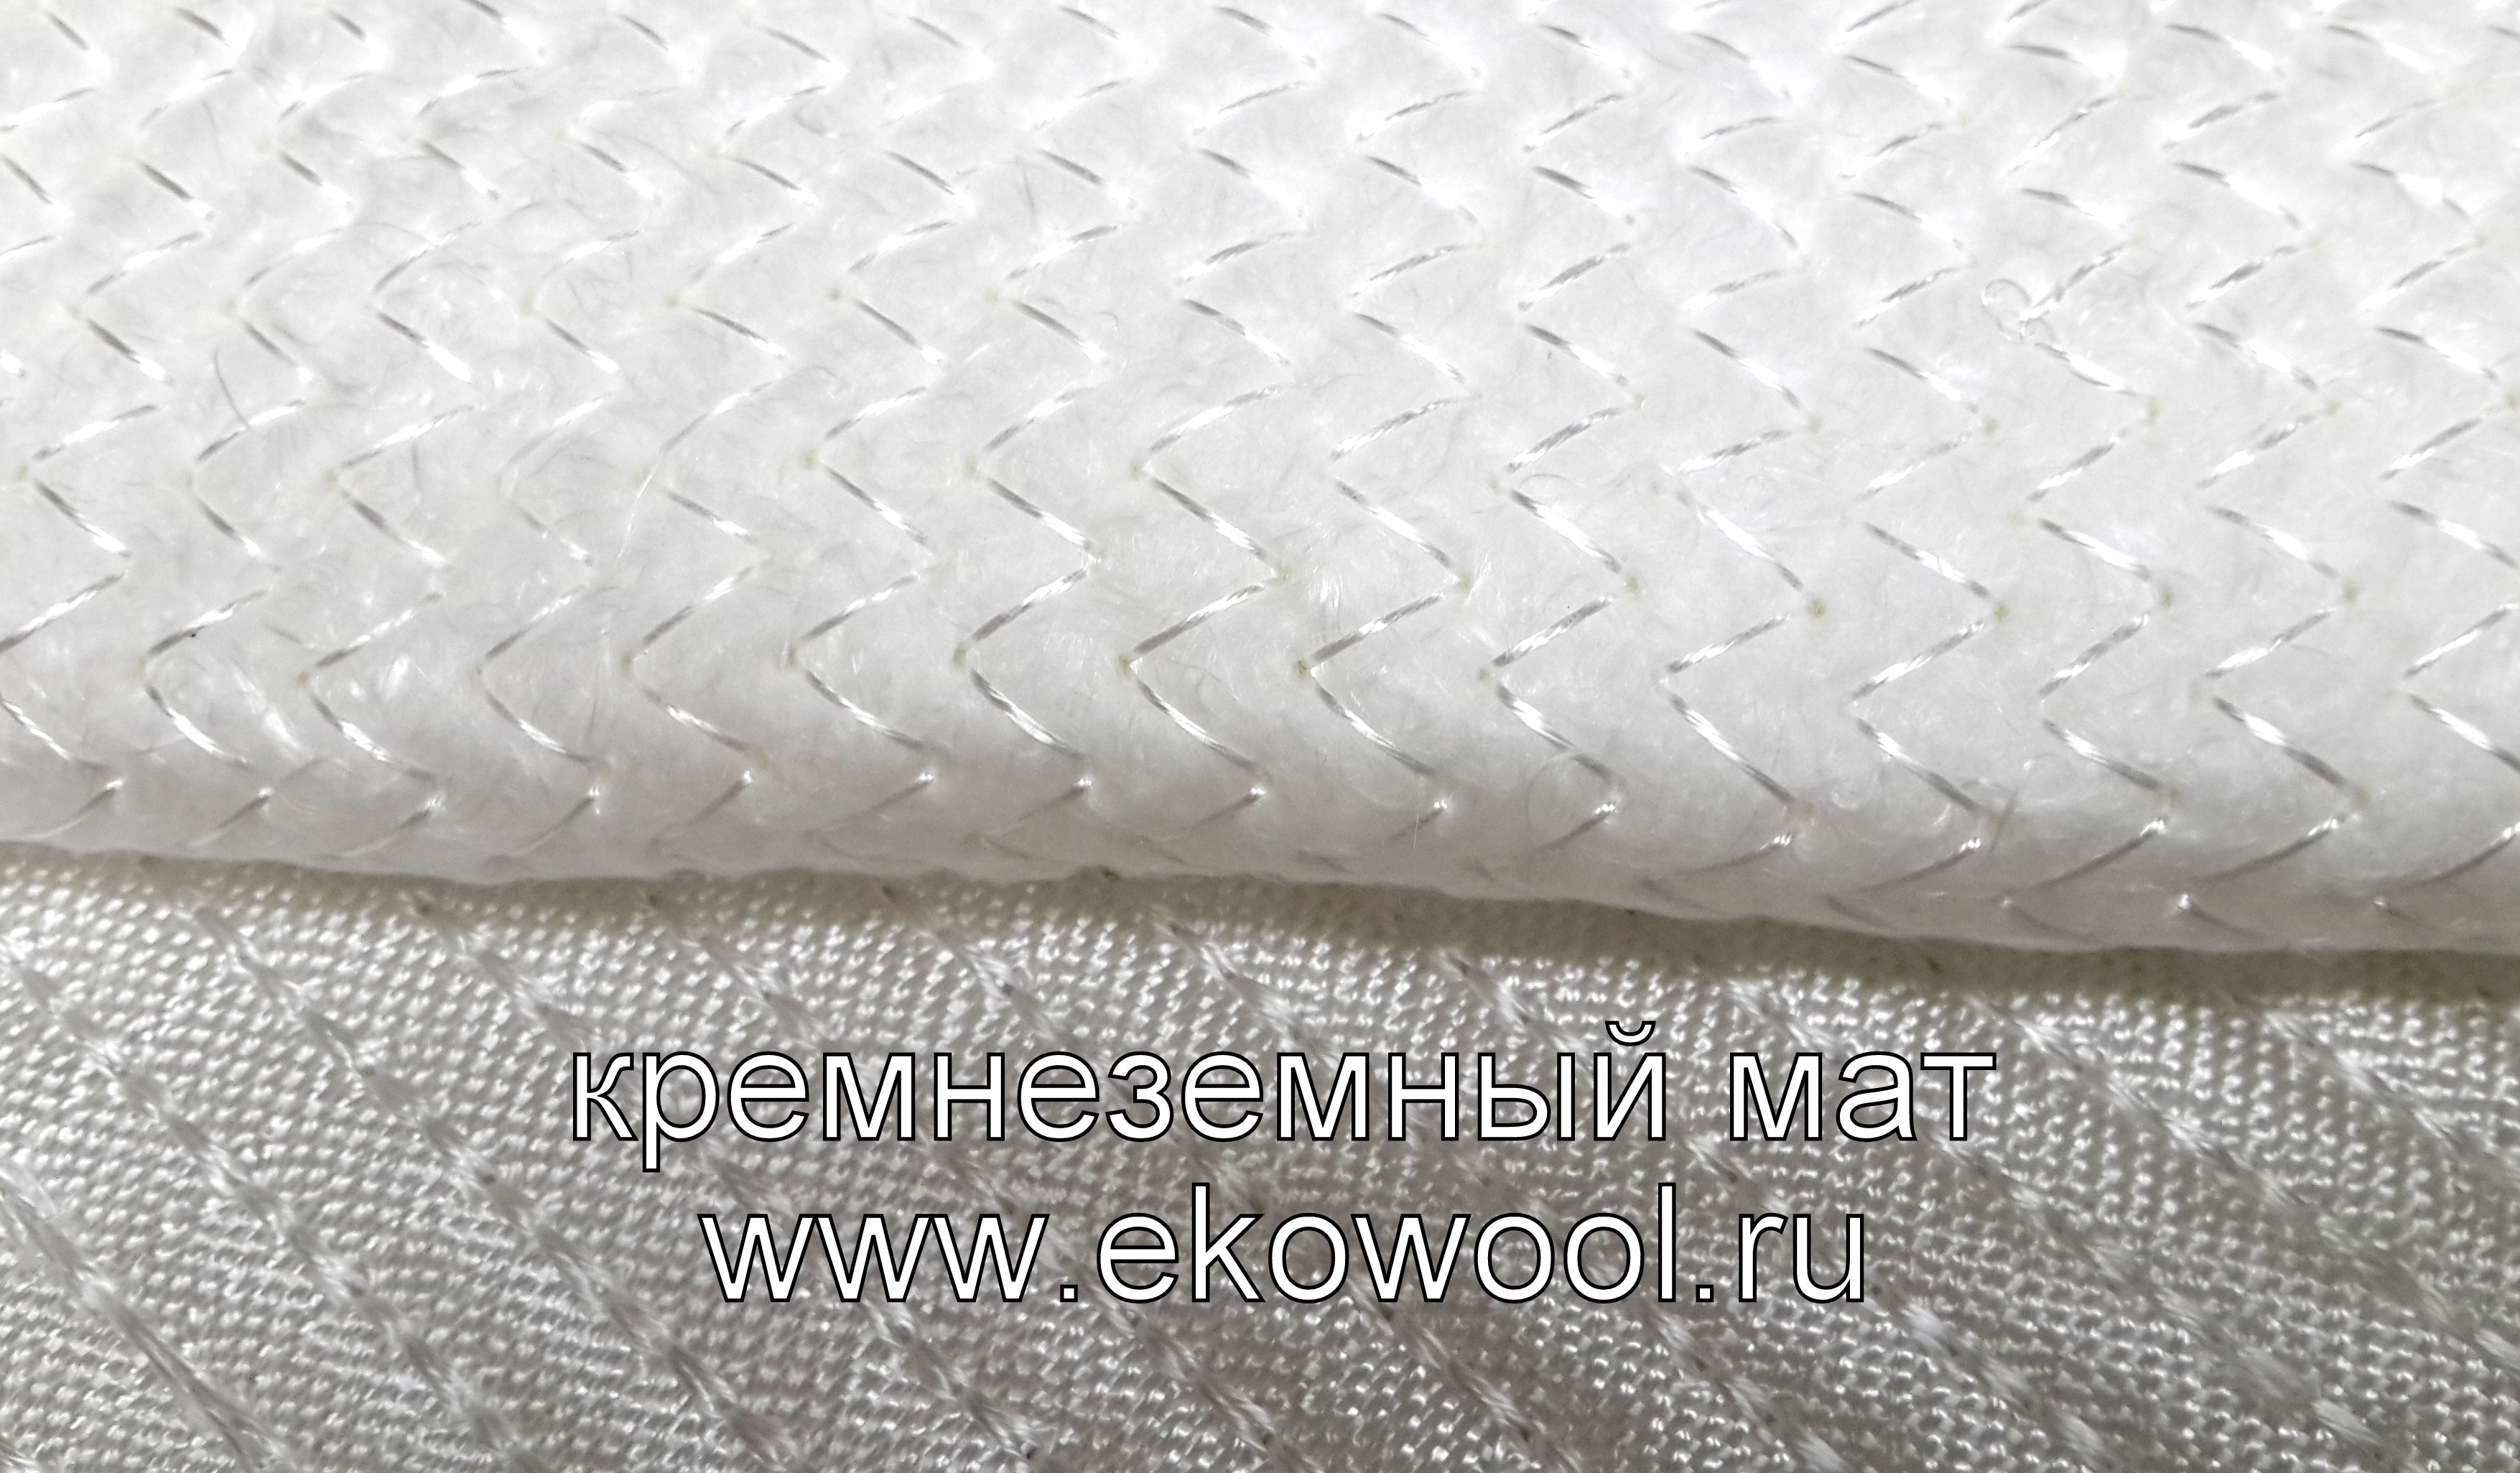 кремнеземный мат, ткань КТ, silica fabric, silica mat